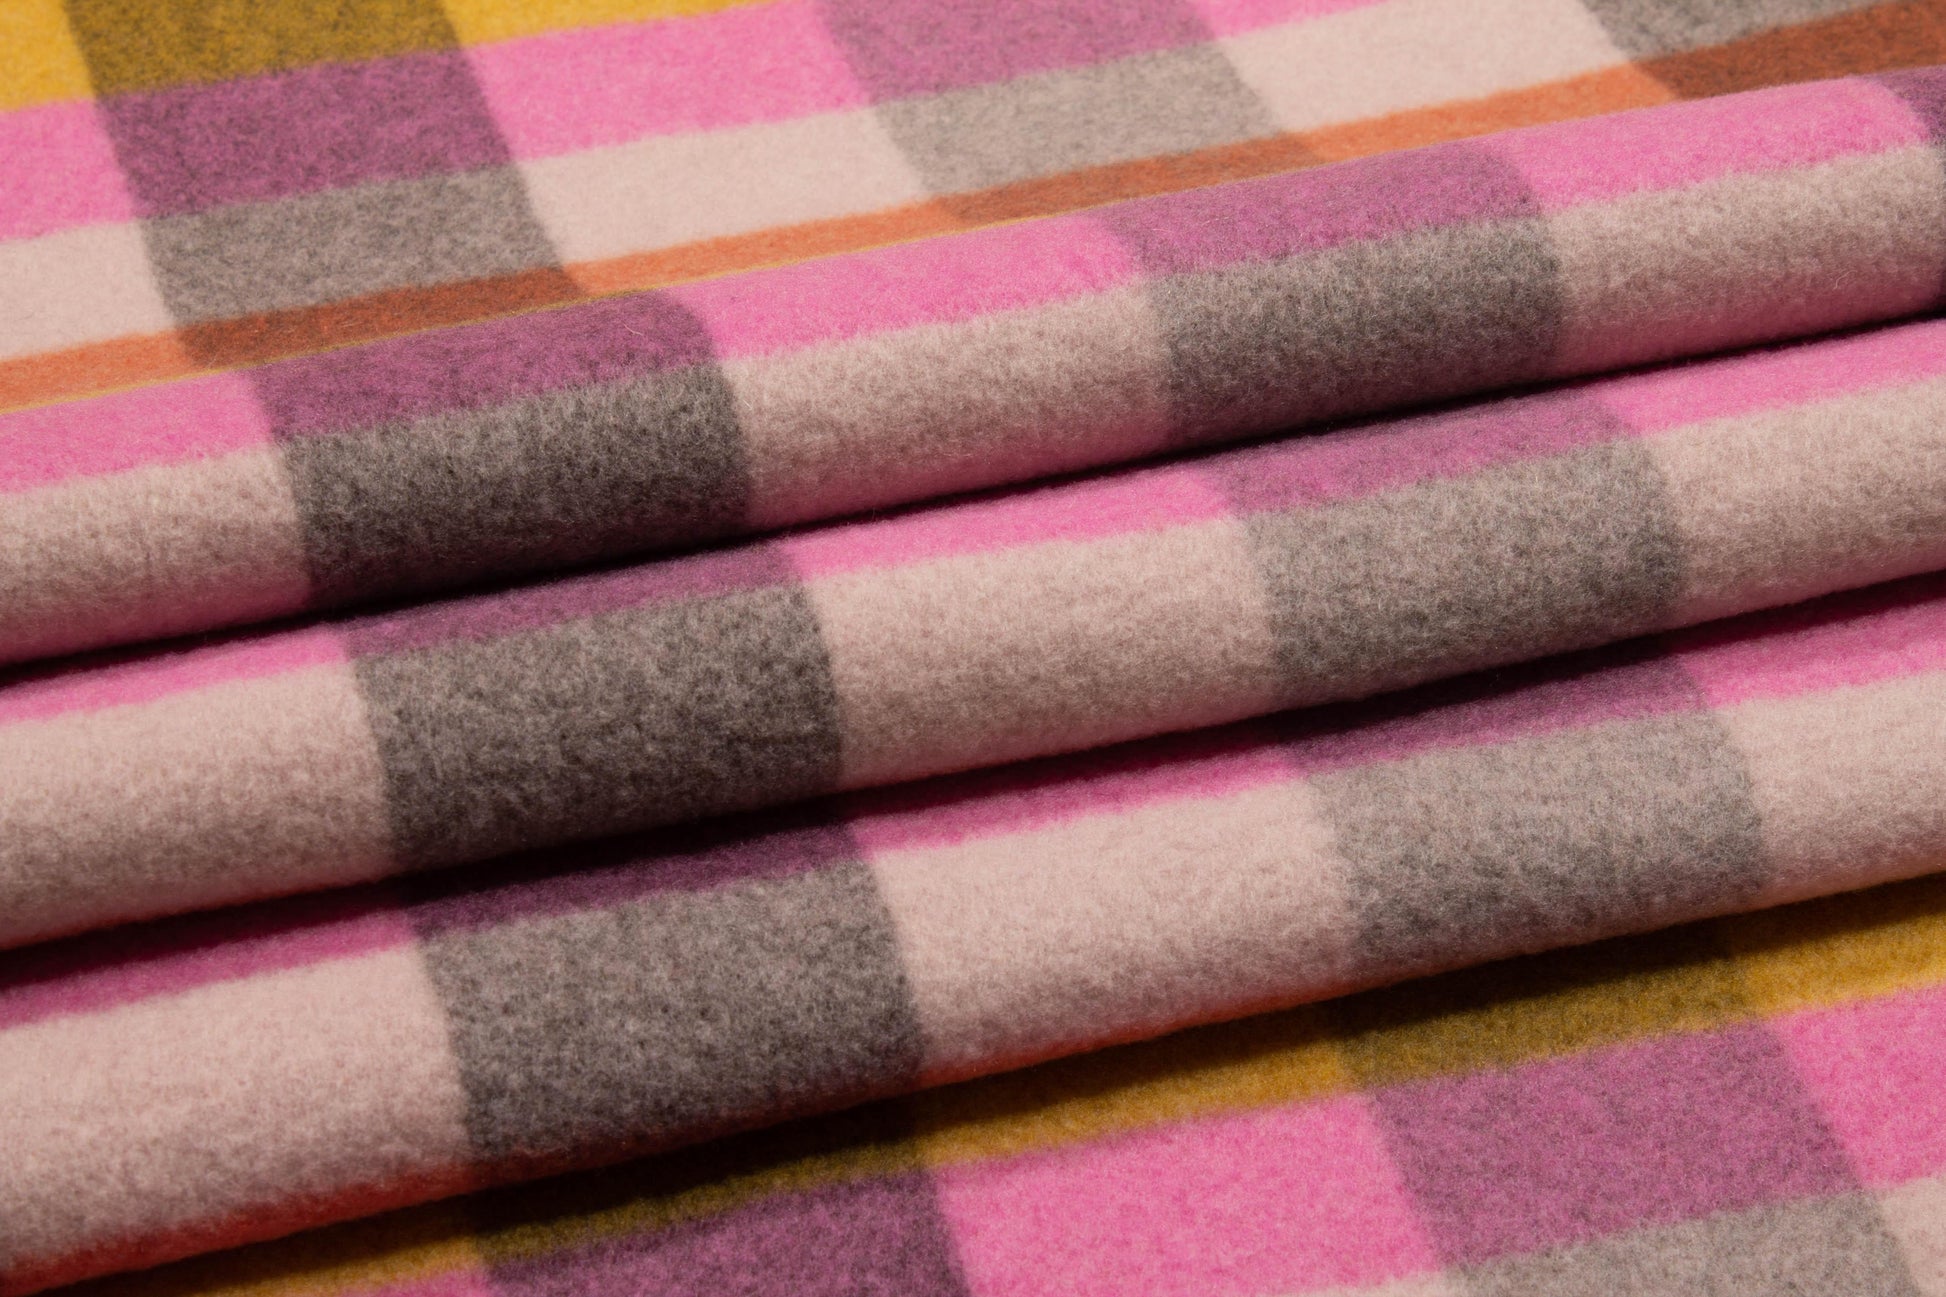 Plaid Double Faced Italian Wool Felt - Pink, Orange, Yellow, White - Prime Fabrics